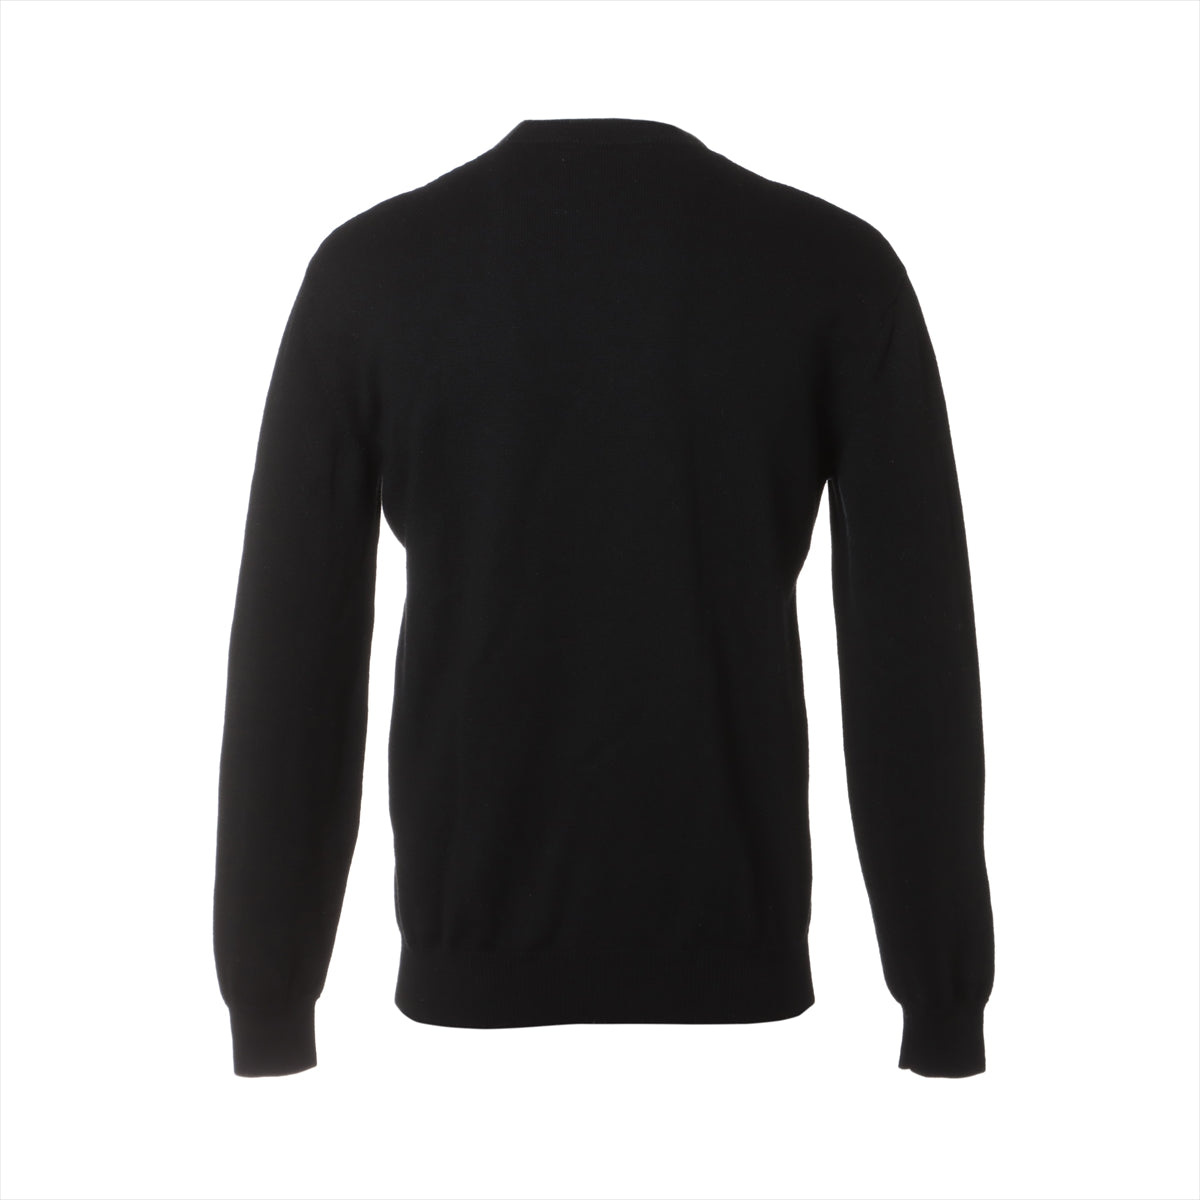 VERSACE Medusa Wool Knit 46 Men's Black × White  Logo crew-neck sweater 1002719